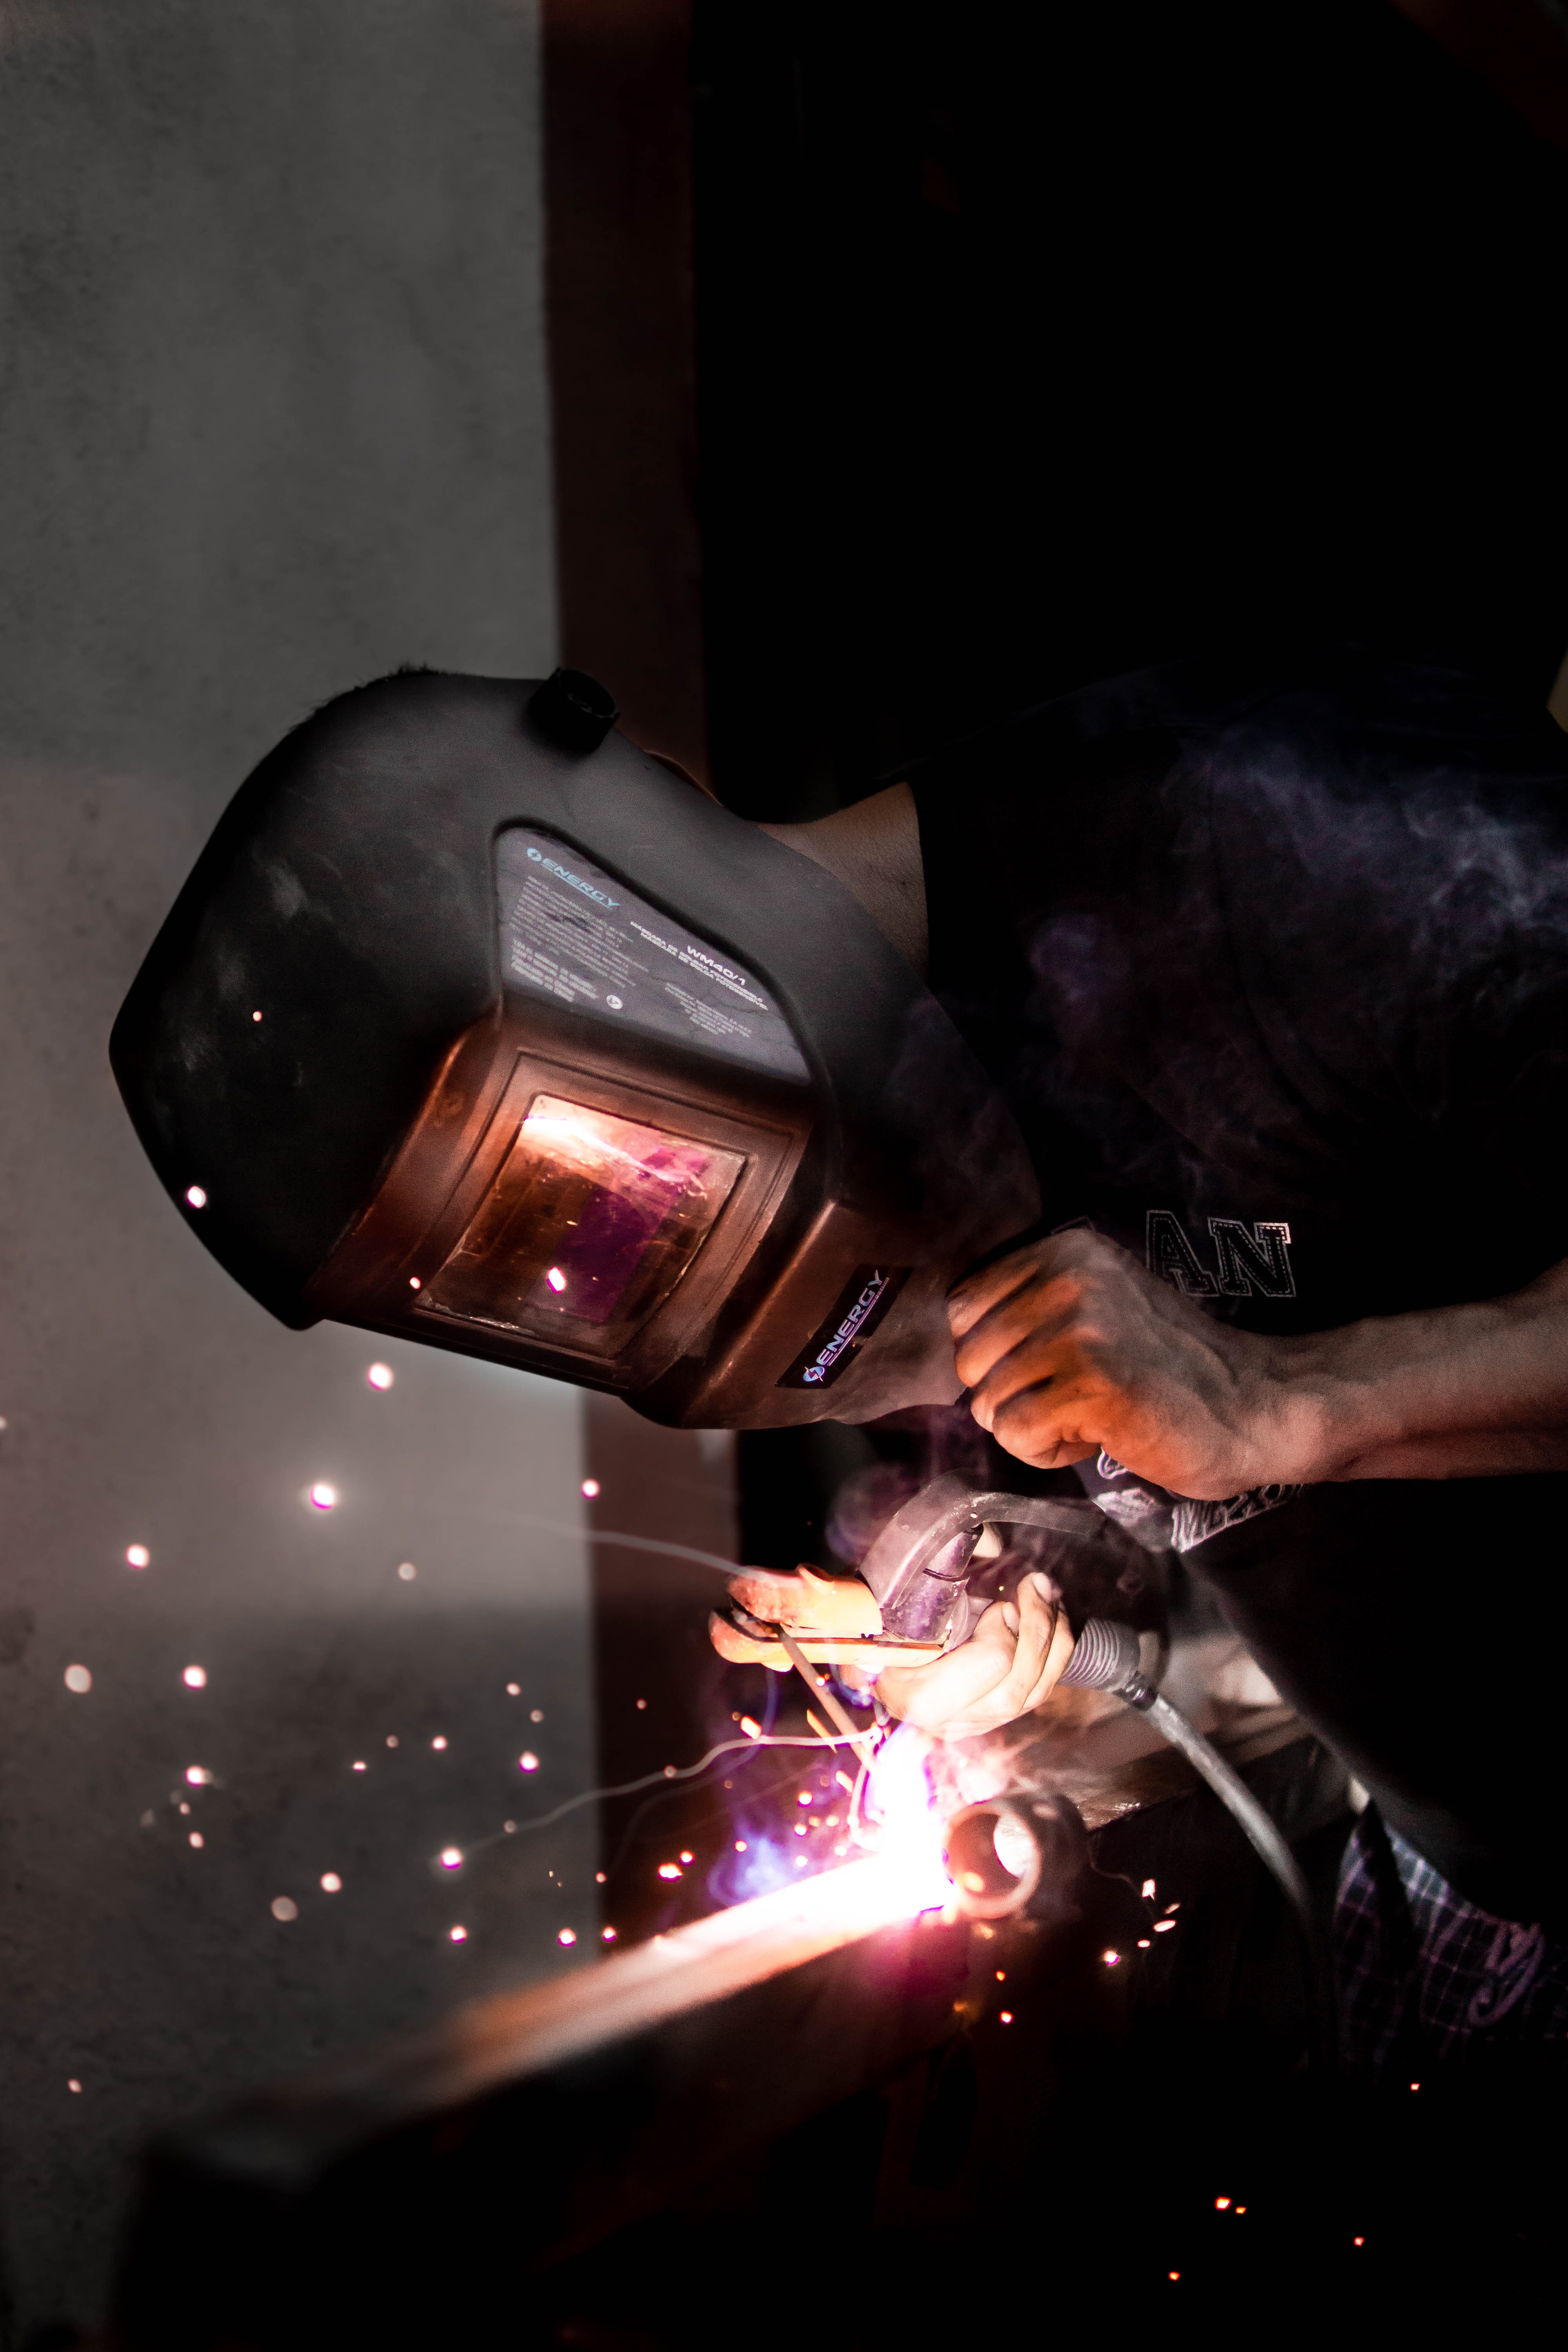 welding, sparks, miscellanea, miscellaneous, helmet, human, person